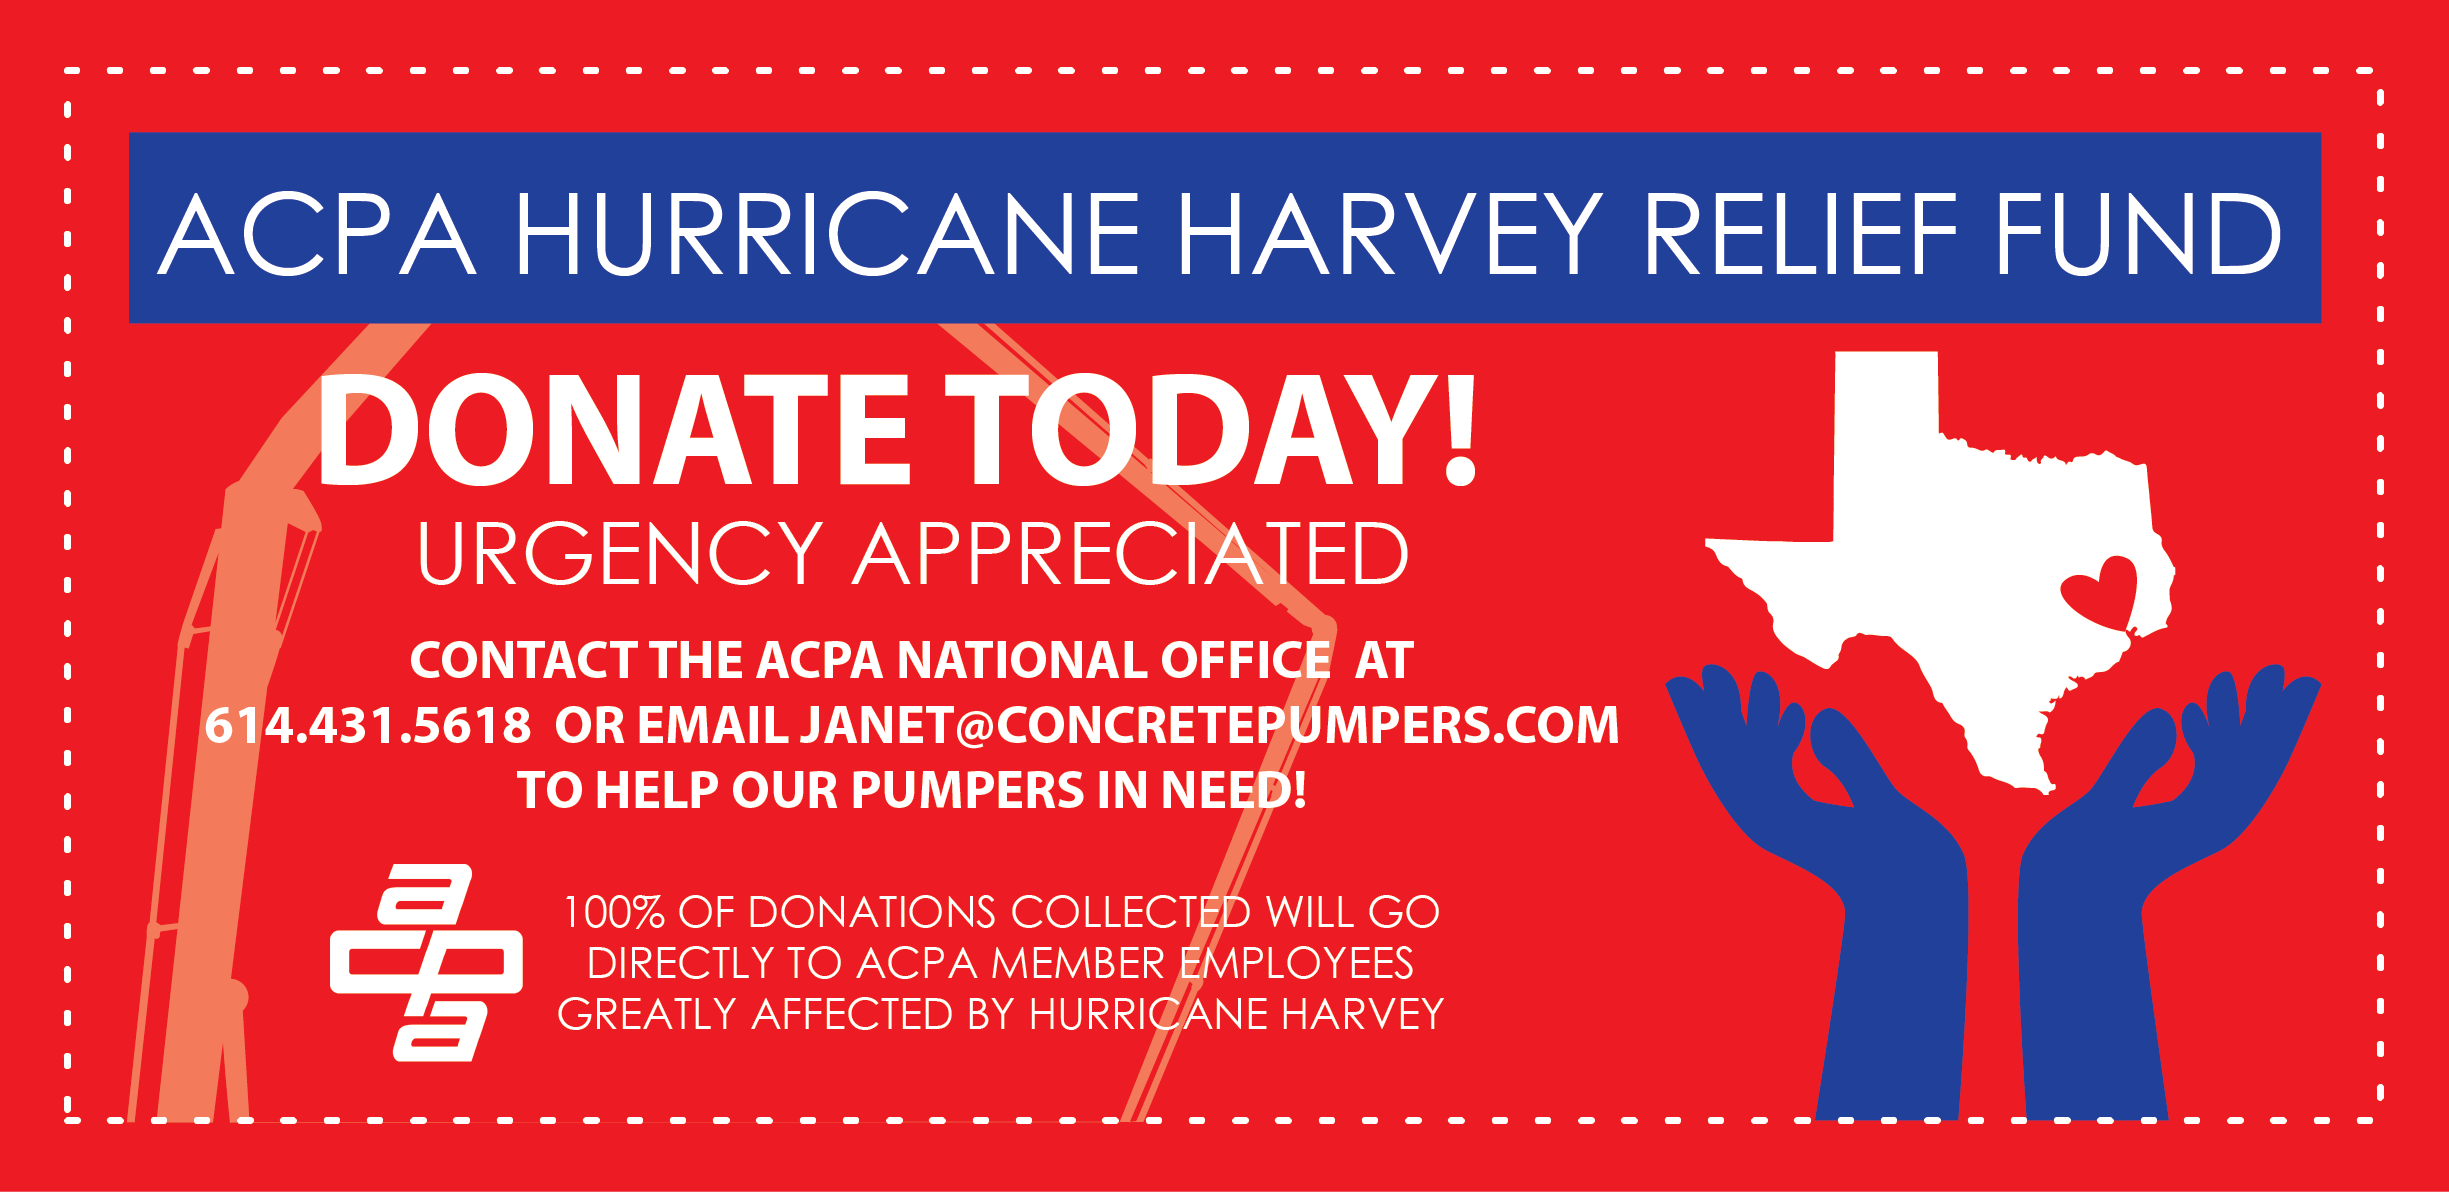 ACPA Hurricane Harvey Relief Fund